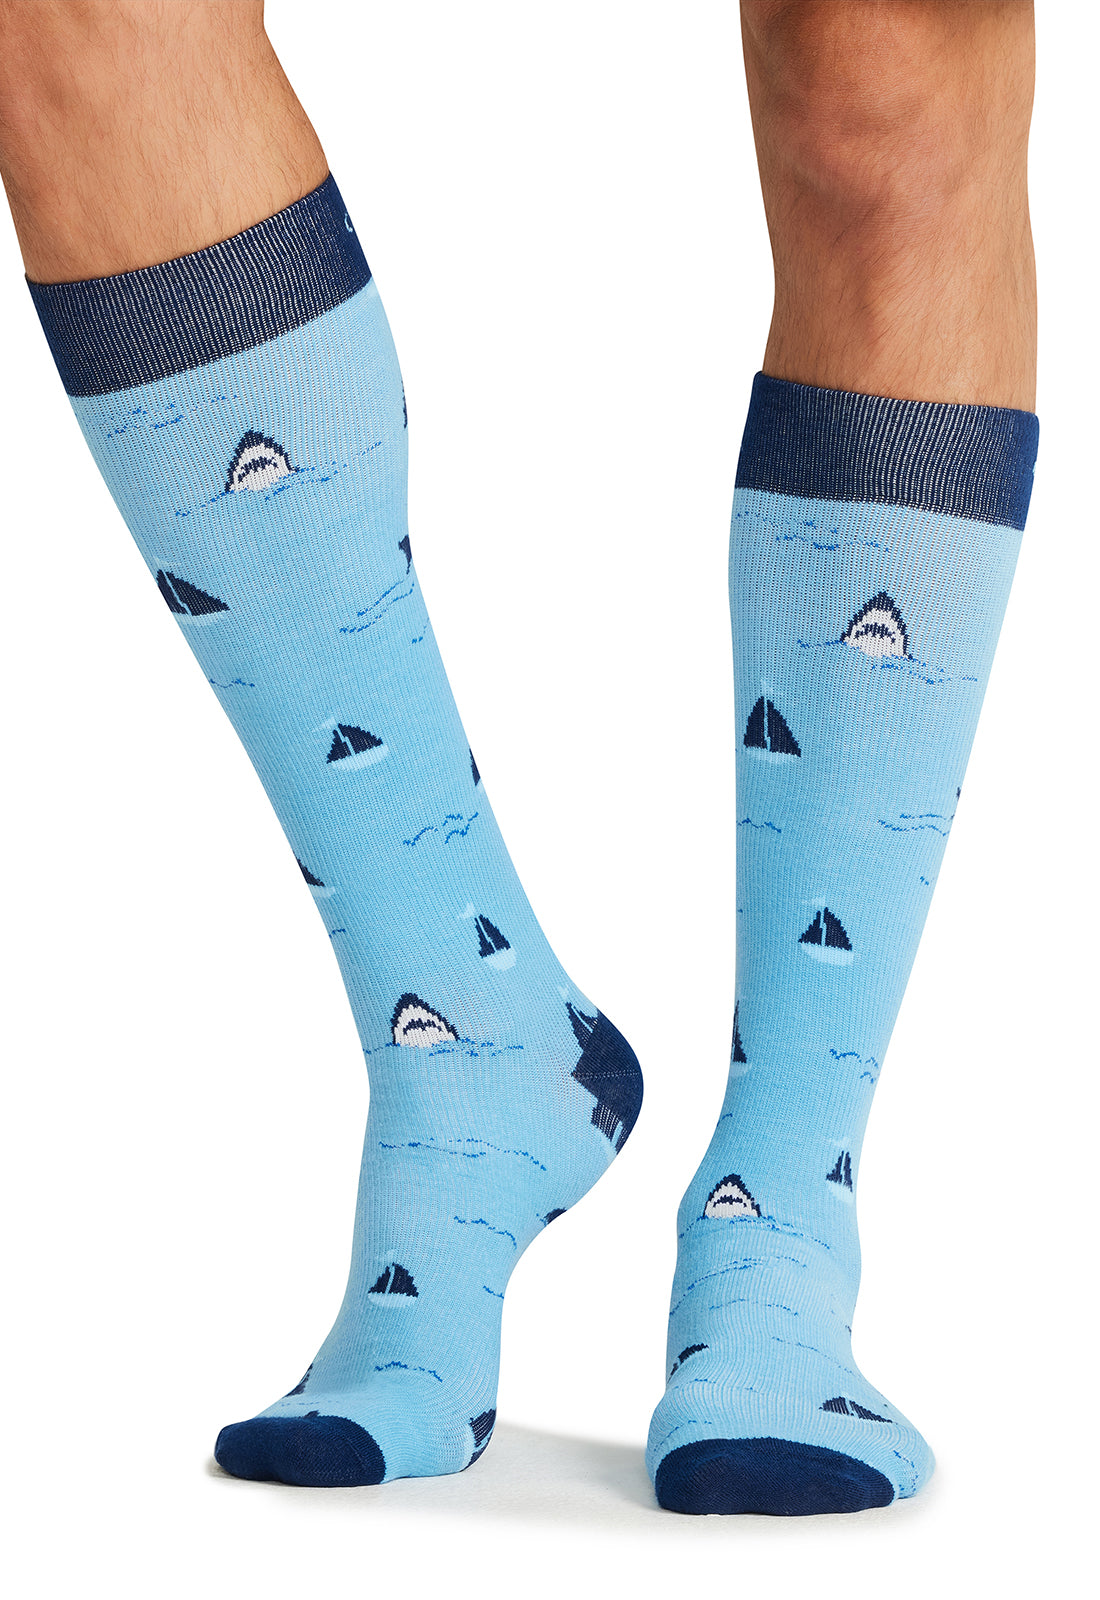 Men's Compression Socks 10-15mmHg